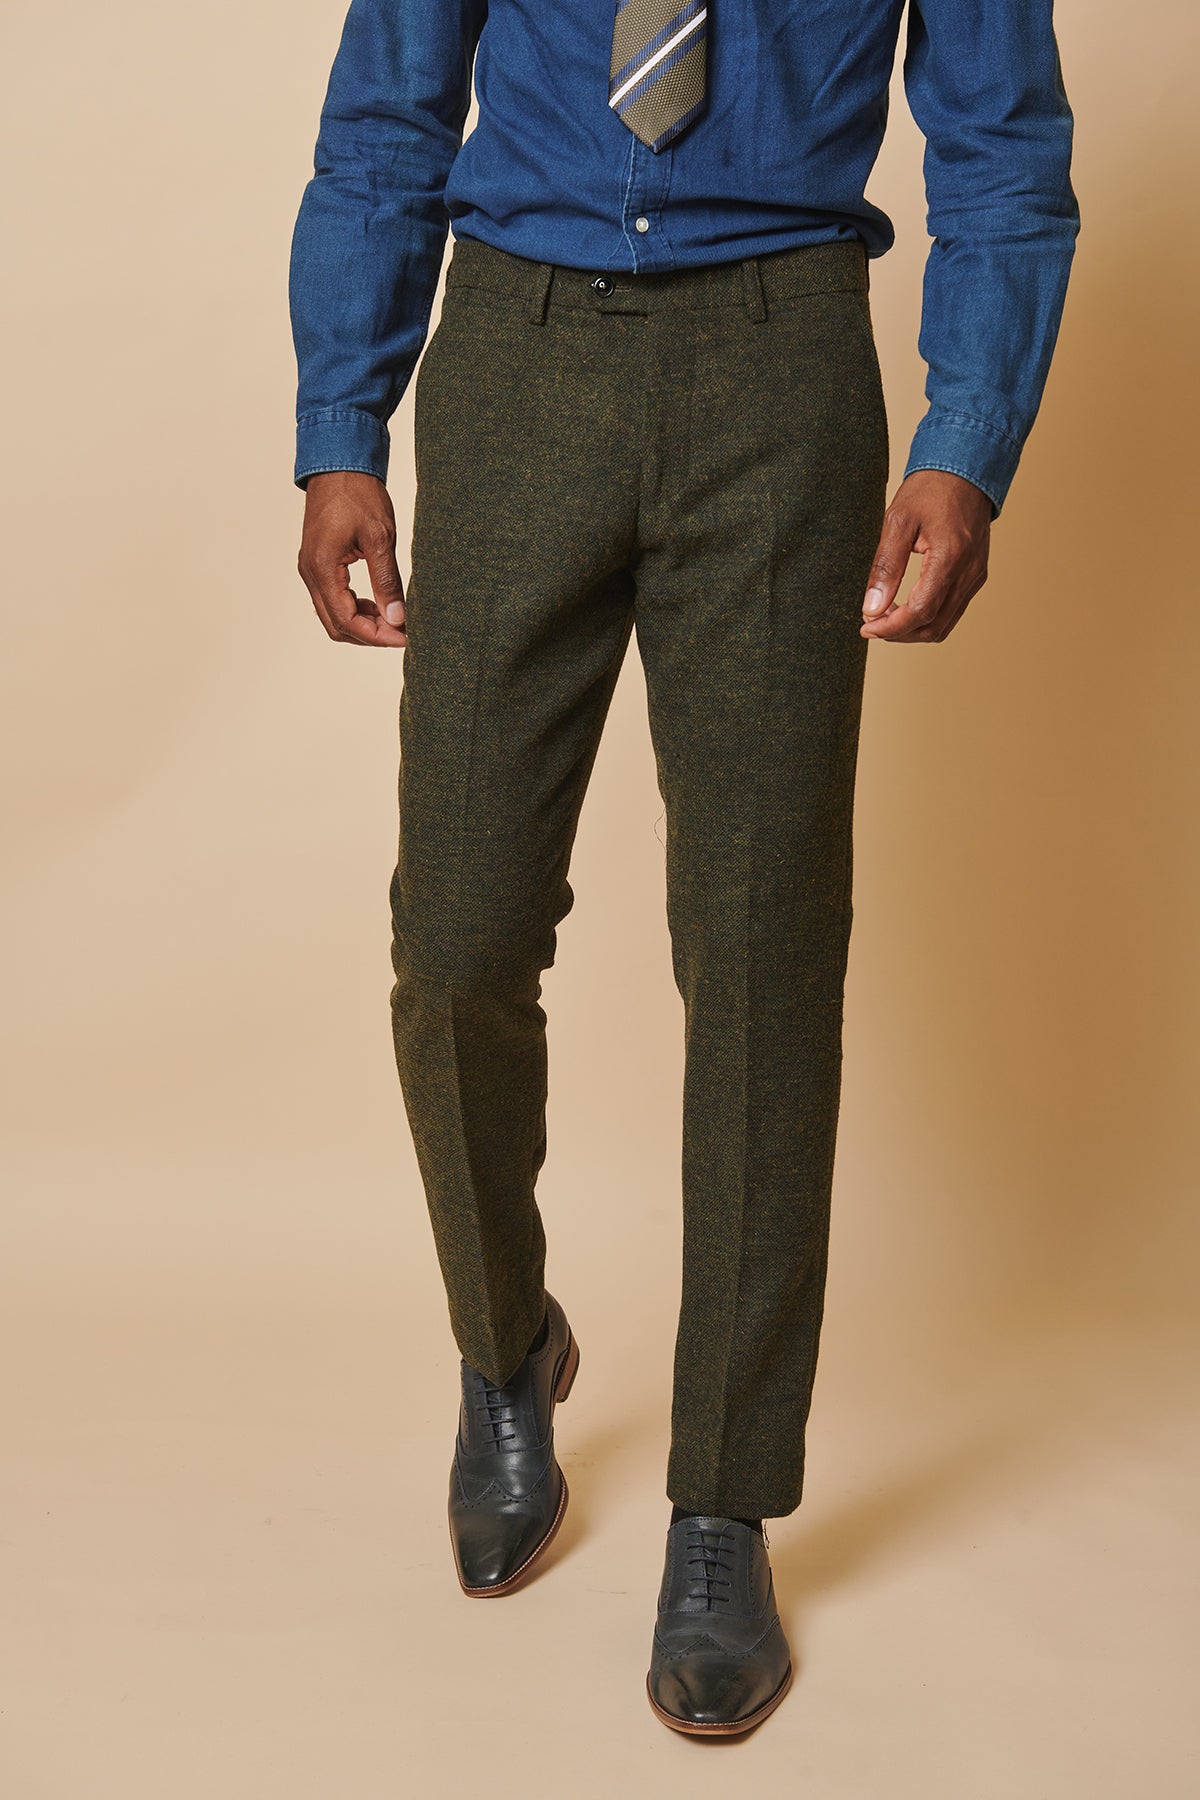 MARLOW - Olive Green Tweed Three Piece Suit